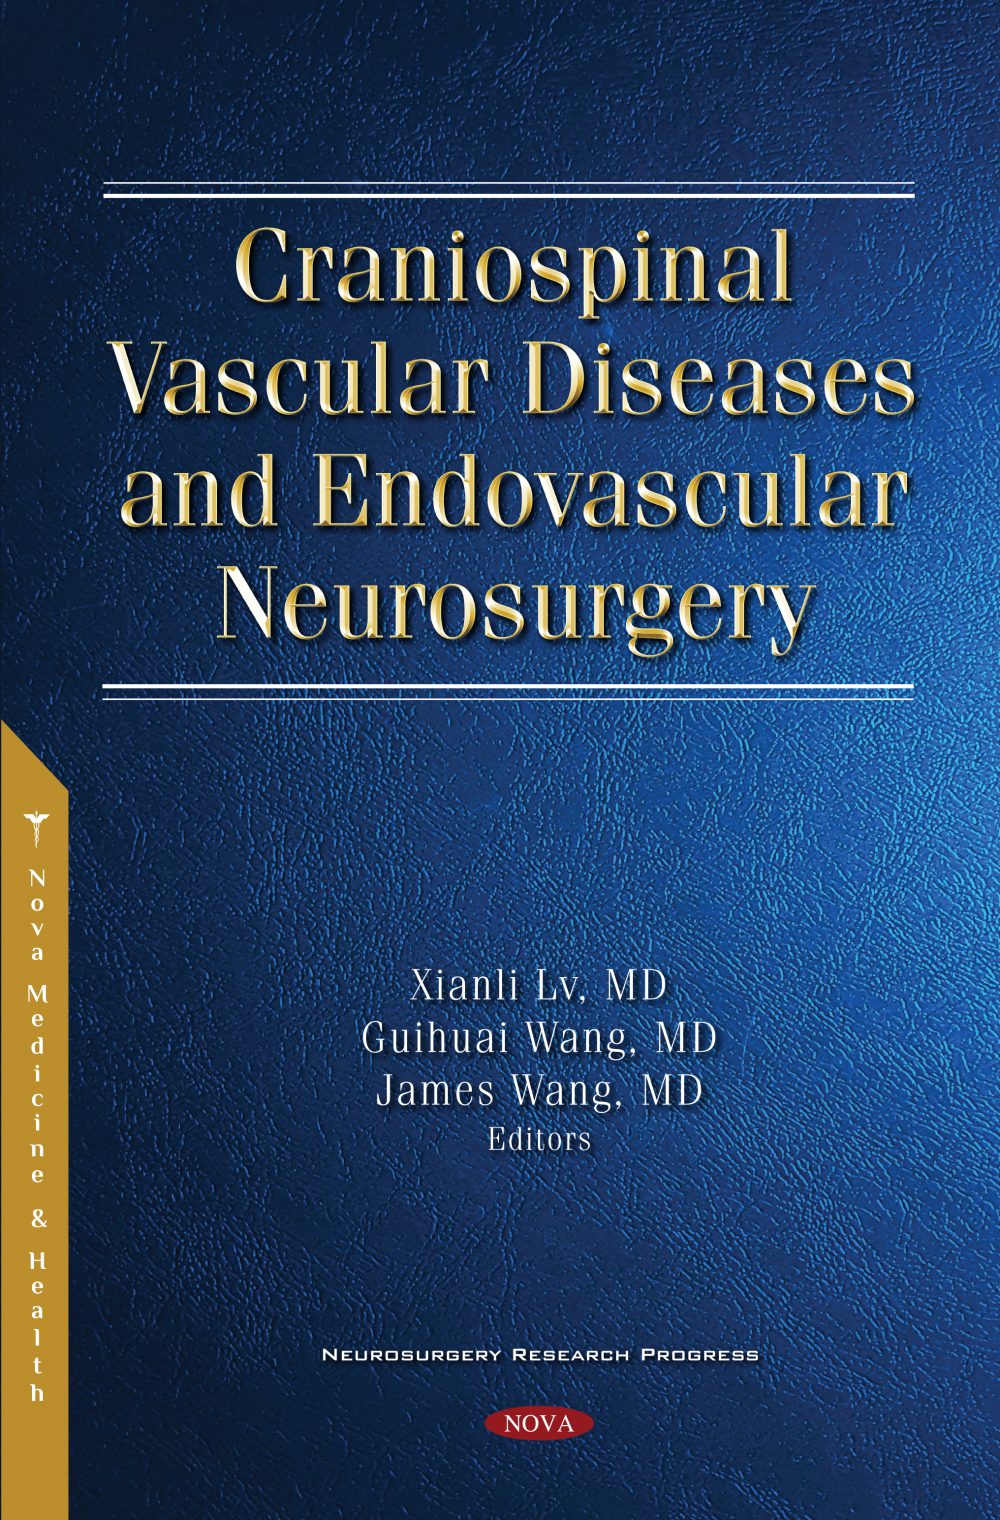 (eBook PDF)Craniospinal Vascular Diseases and Endovascular Neurosurgery by James Wang Xianli Lv, Guihuai Wang